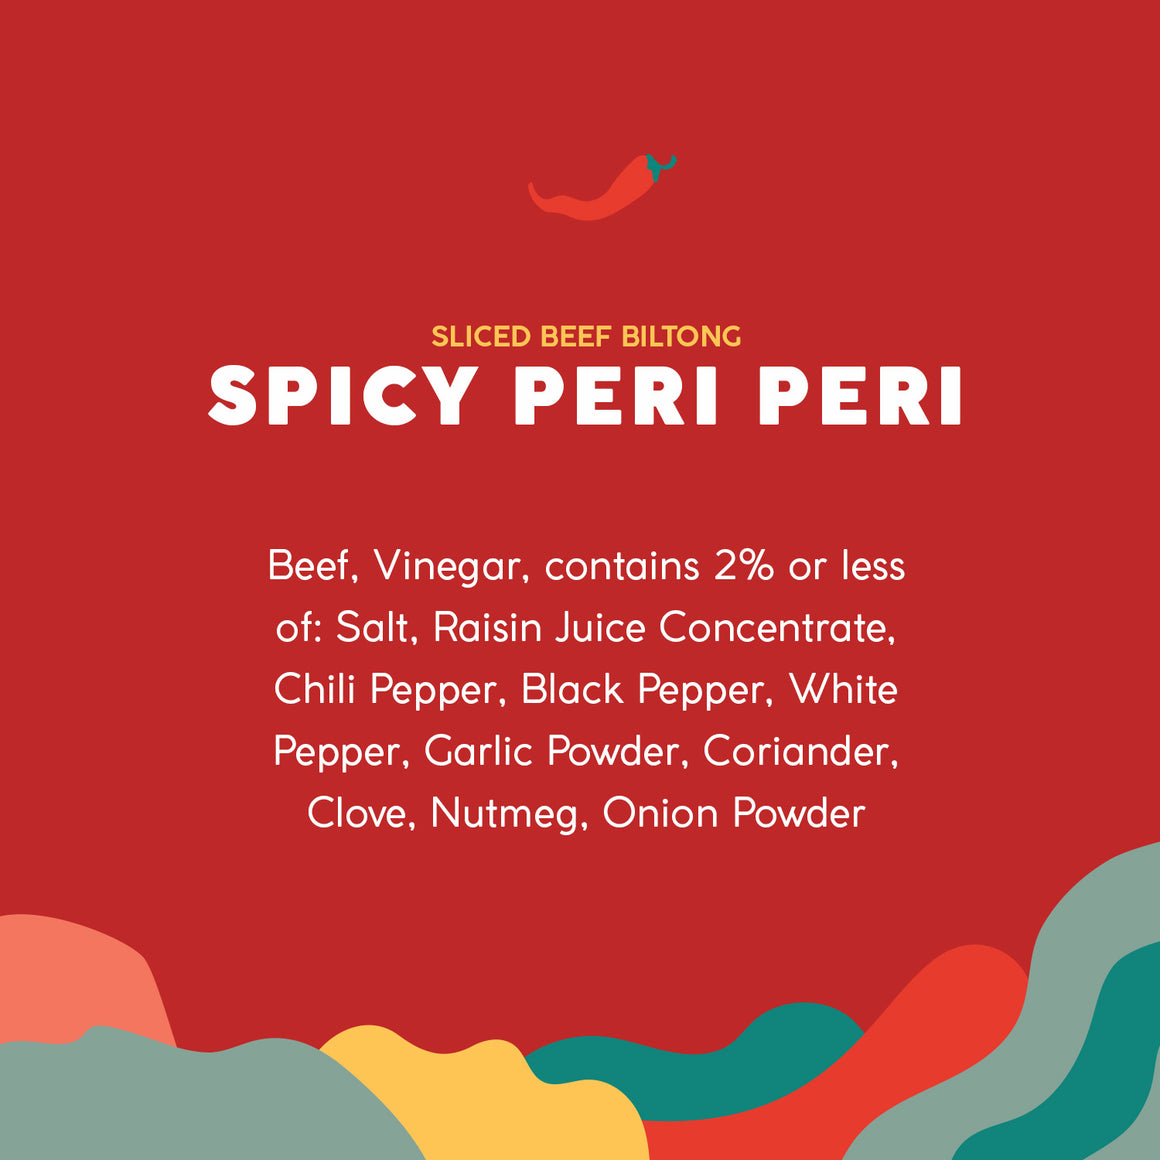 Spicy Pepper (Peri Peri) Sliced Biltong